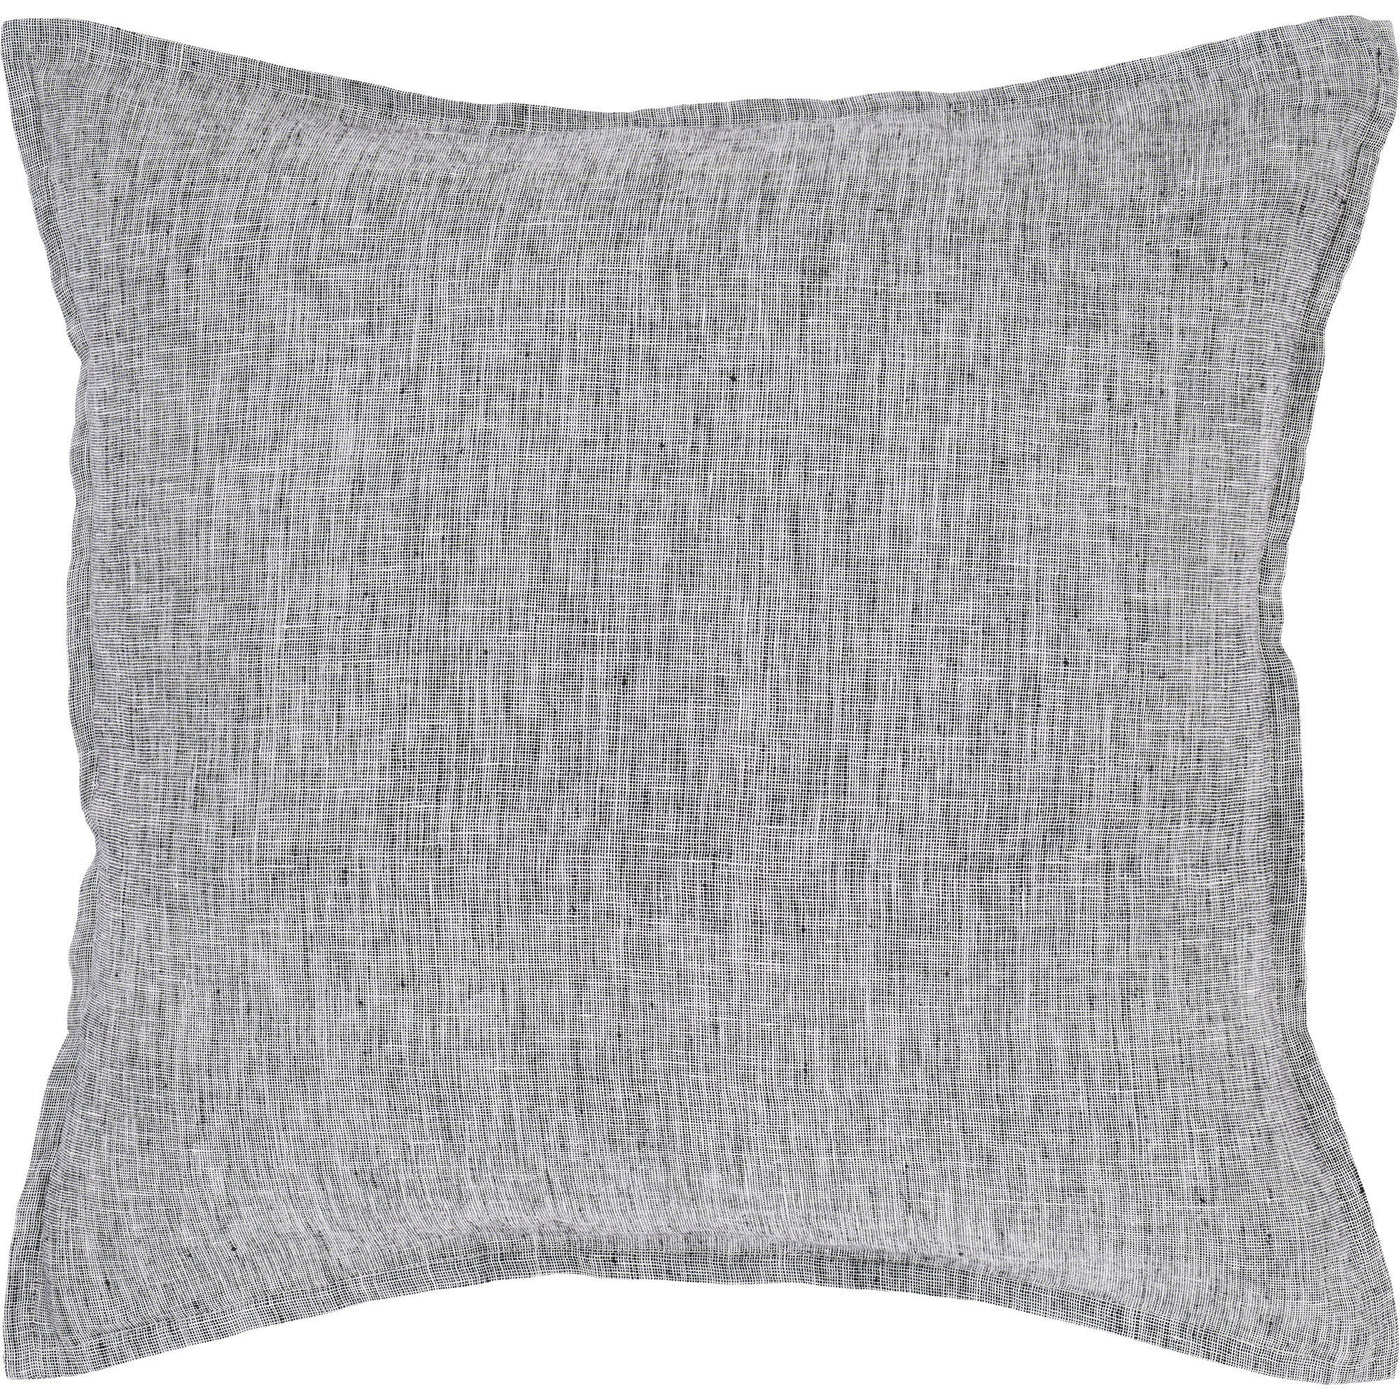 Meyer Decorative Pillow